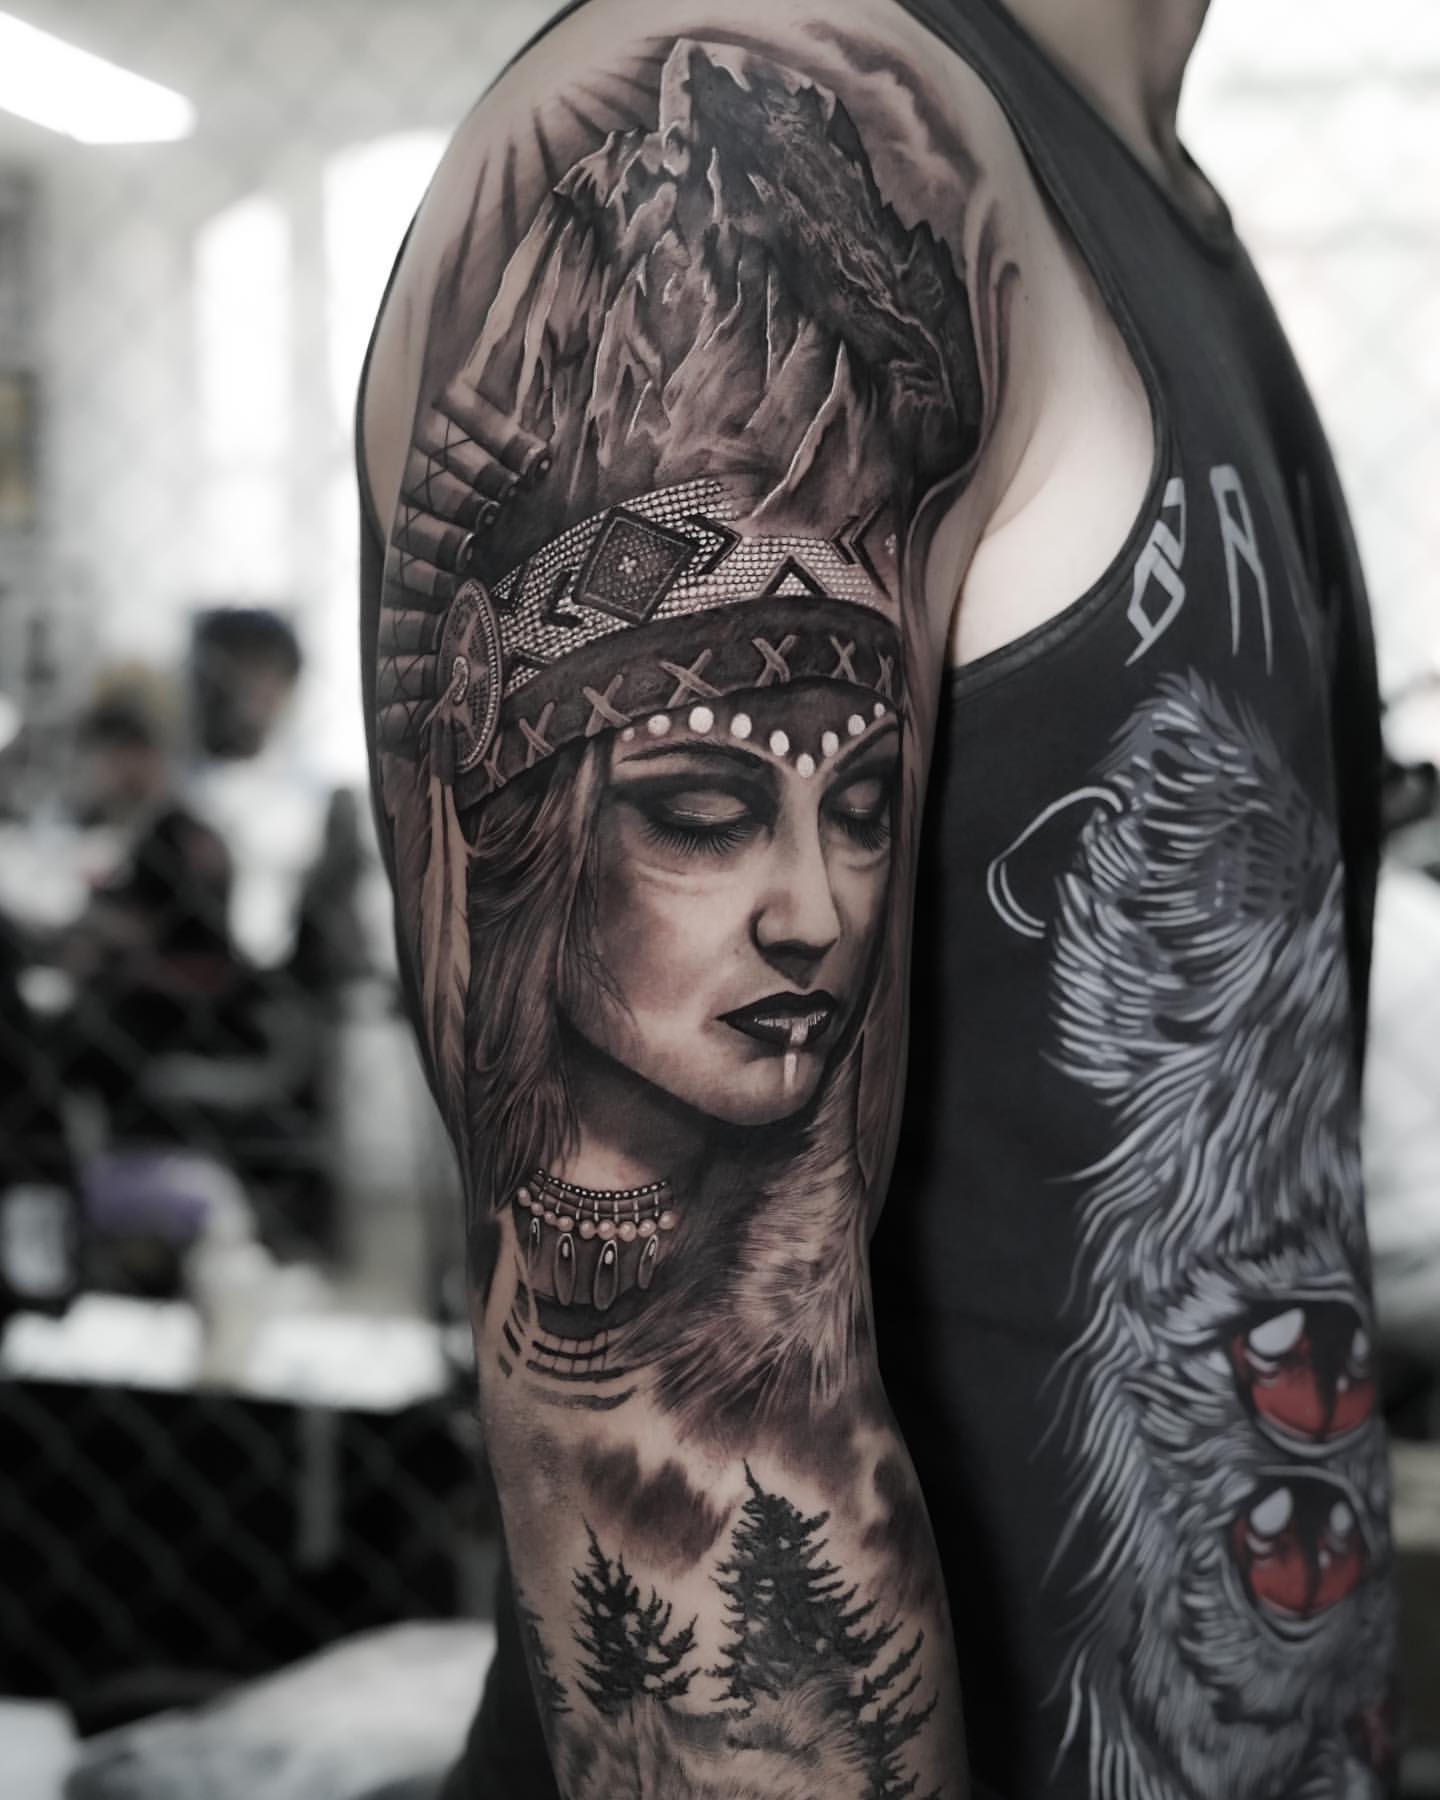 Mike Indian Girl in Headdress – Neck Deep Tattoo